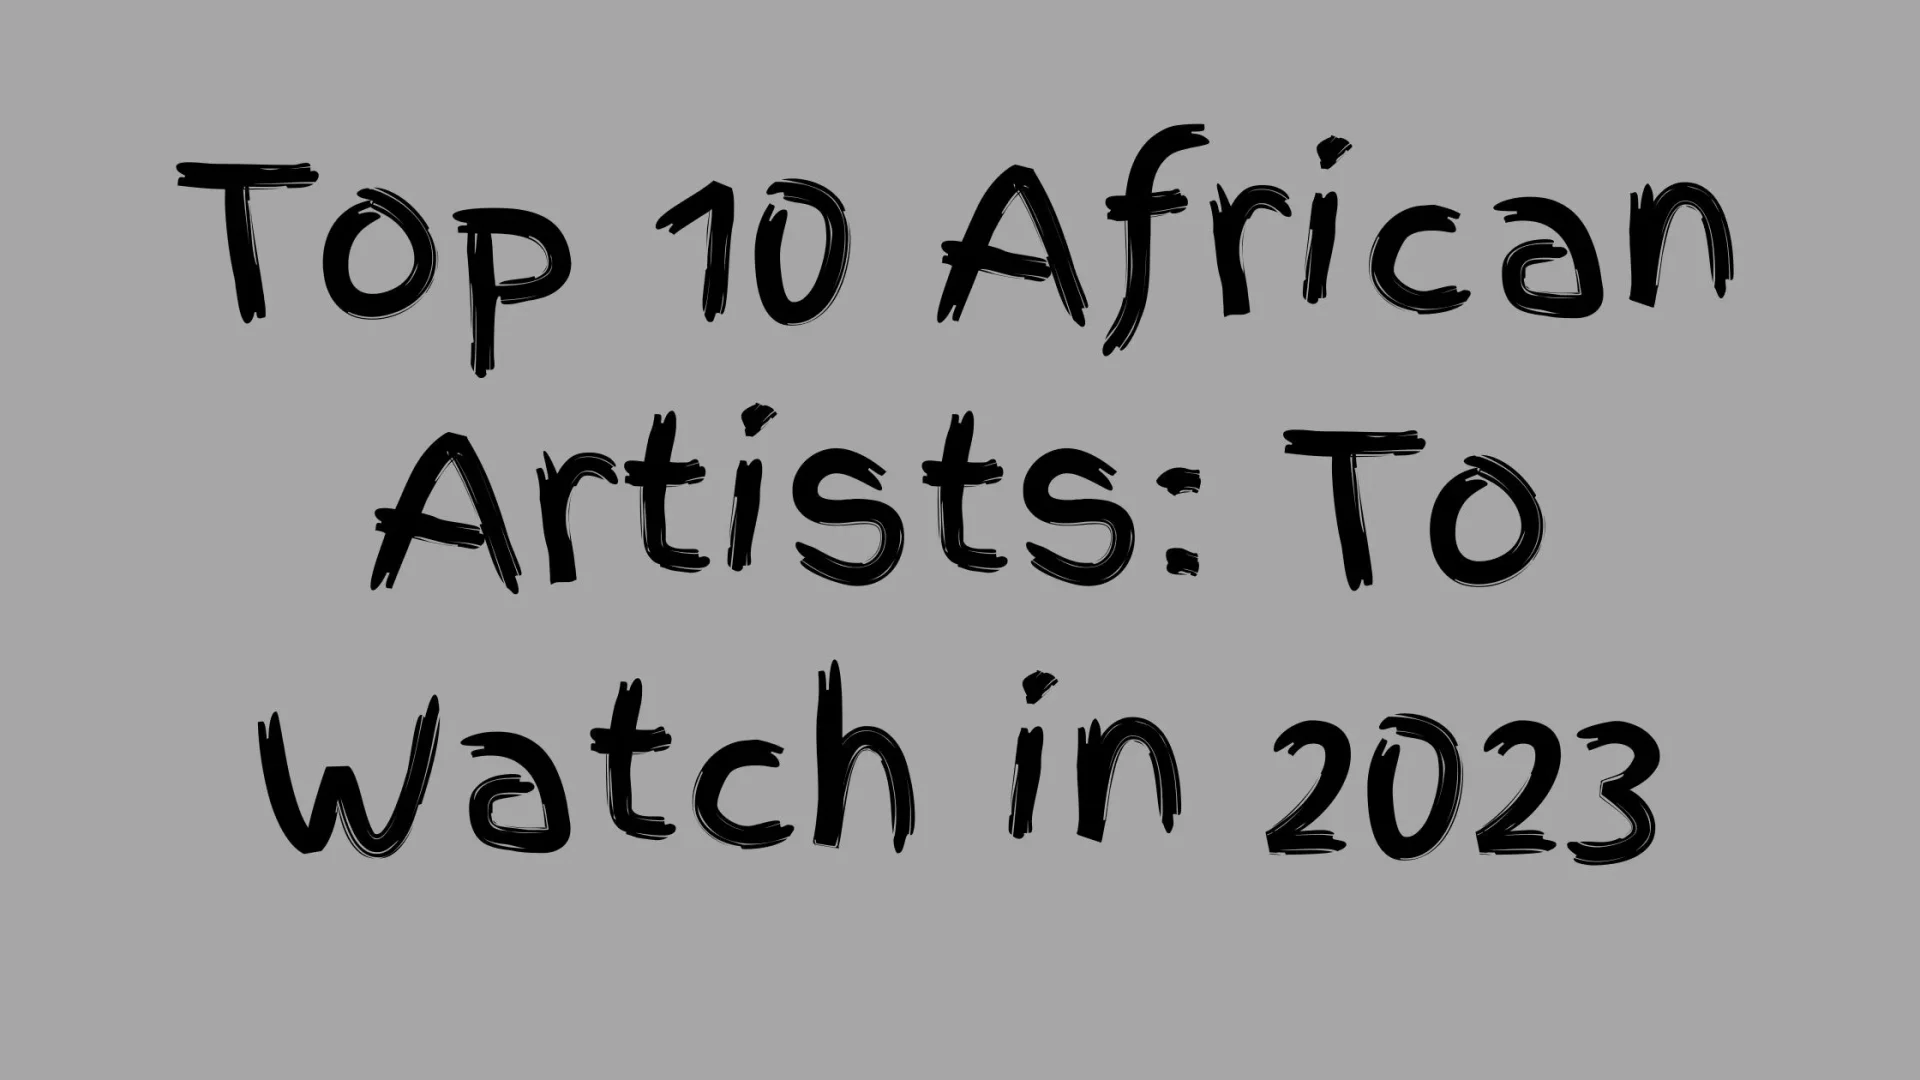 Top 10 African Artists To Watch.webp